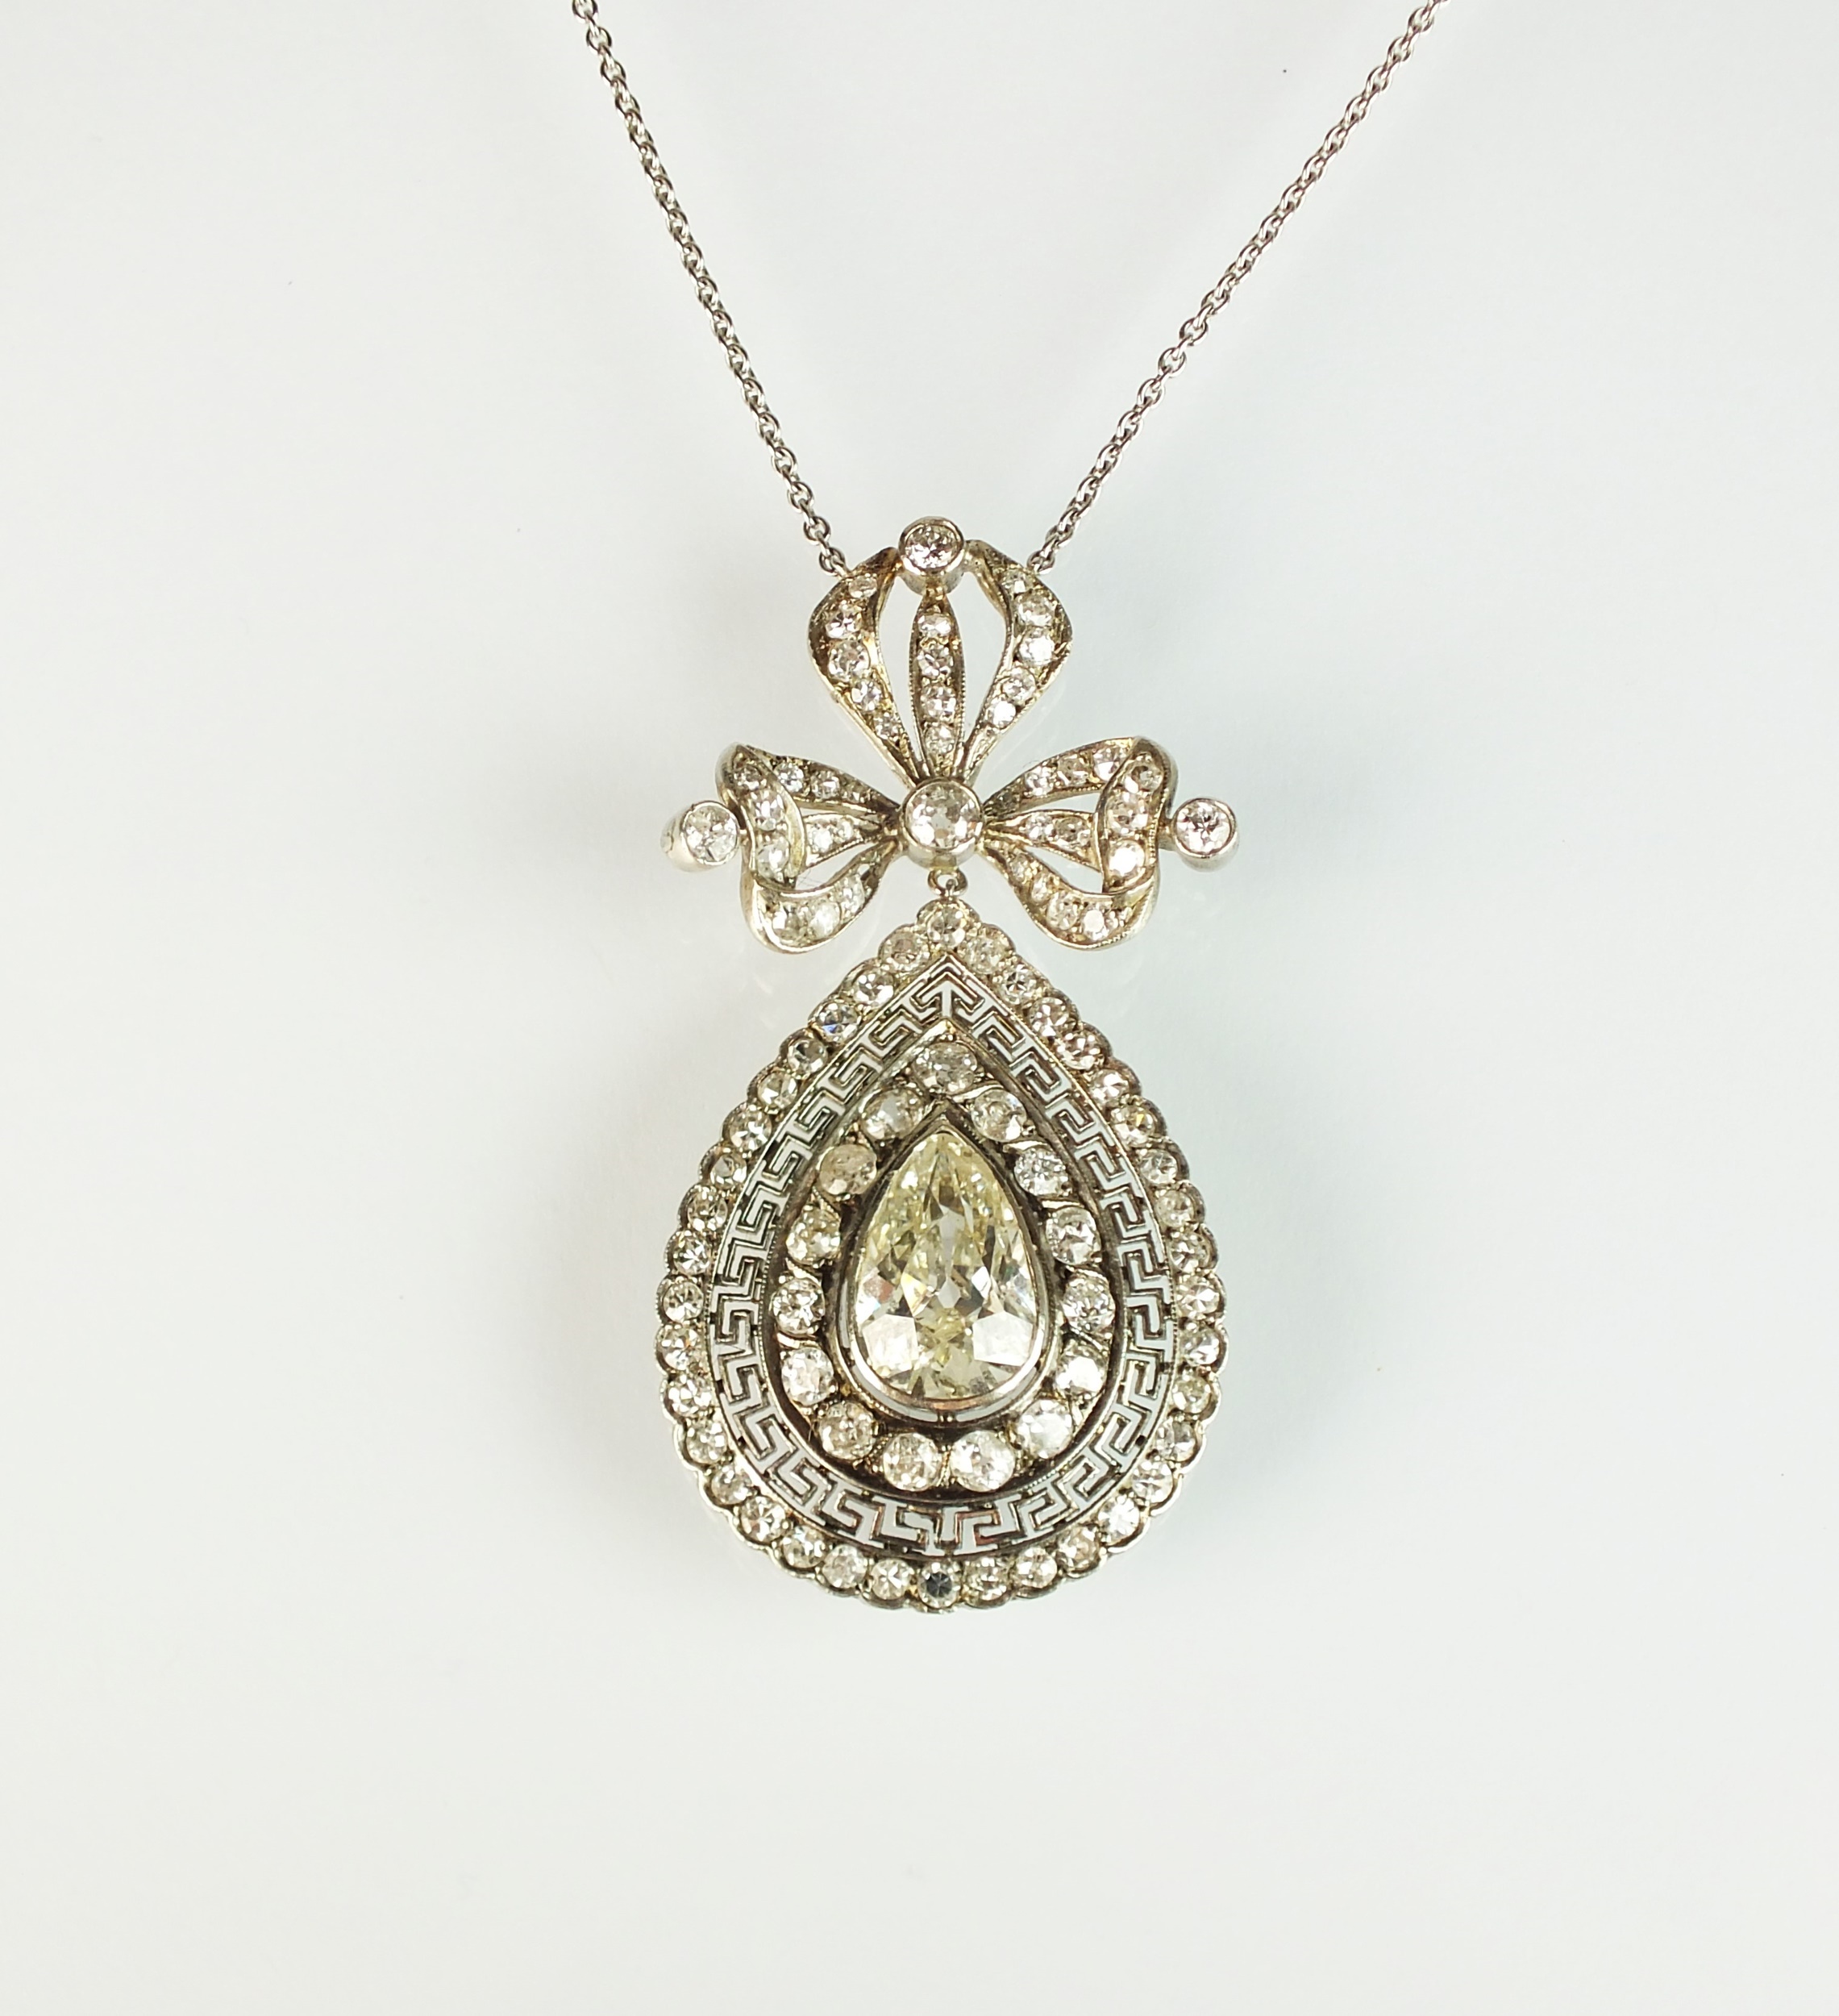 Belle Epoque diamond necklace